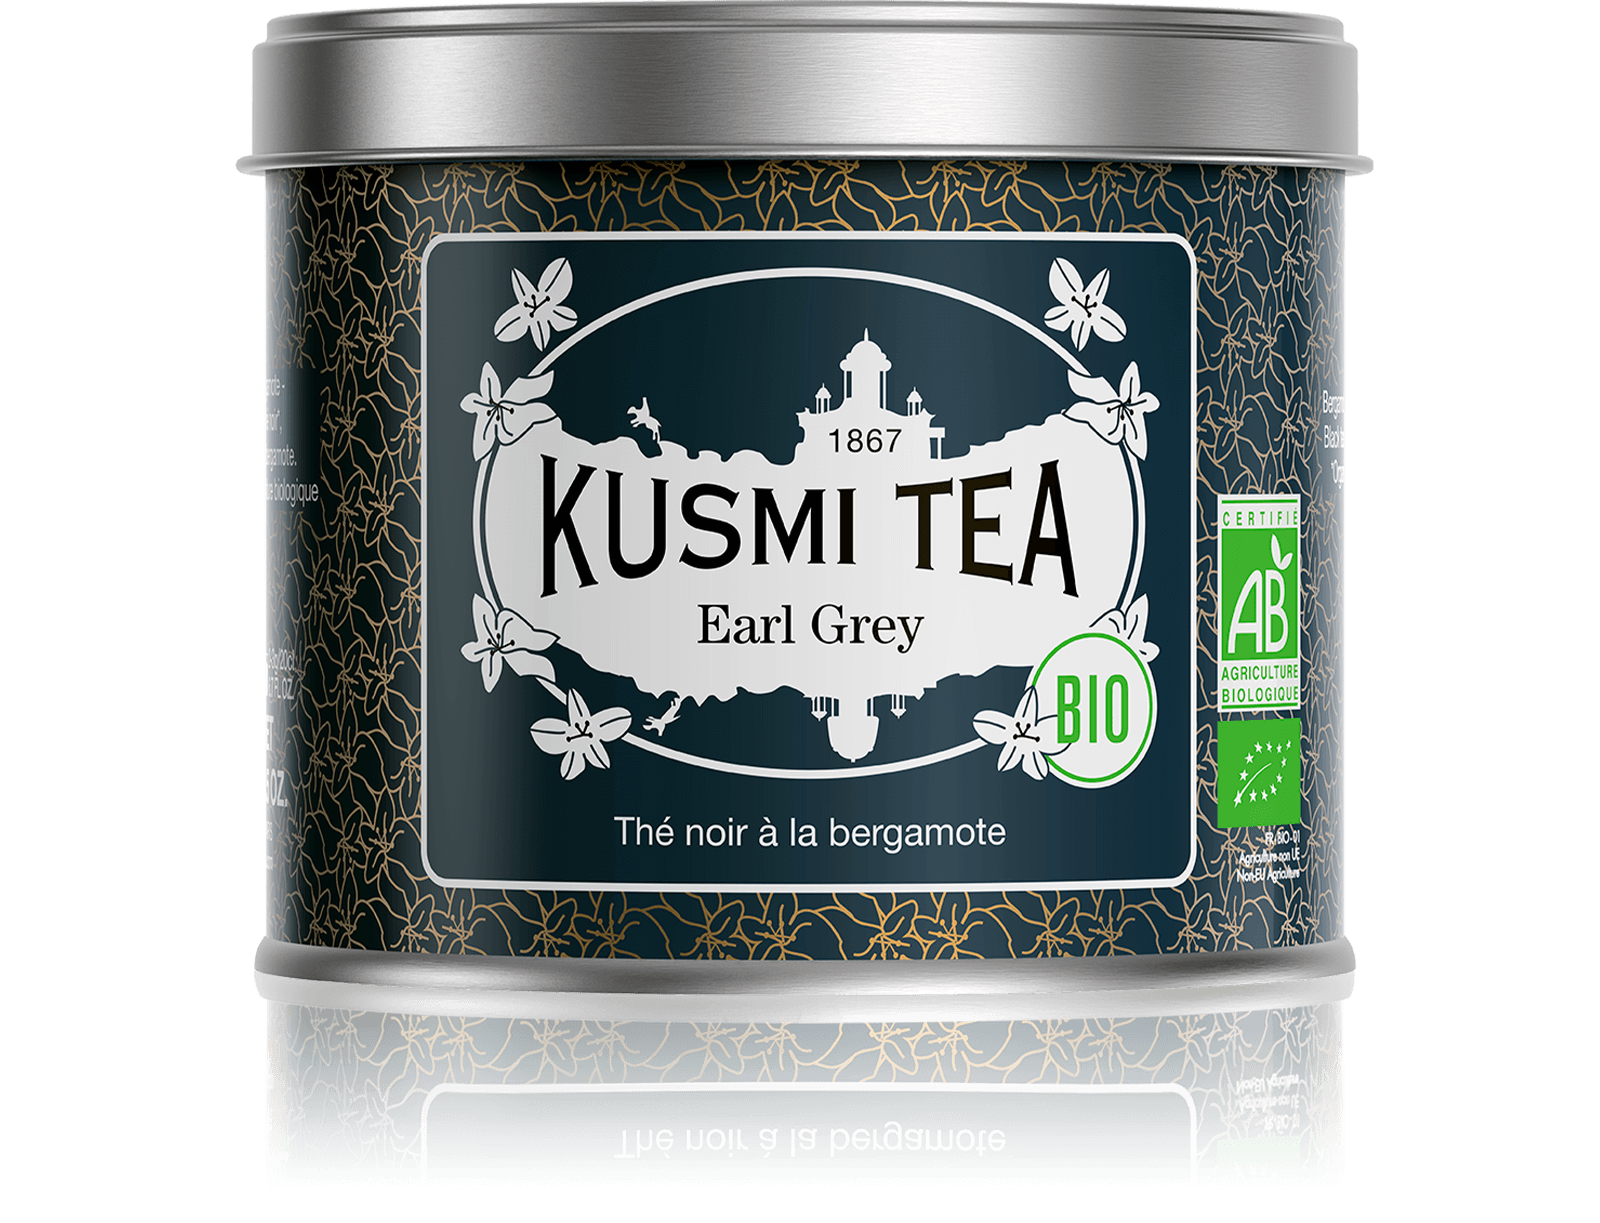 Our teas & herbal teas - Kusmi Tea